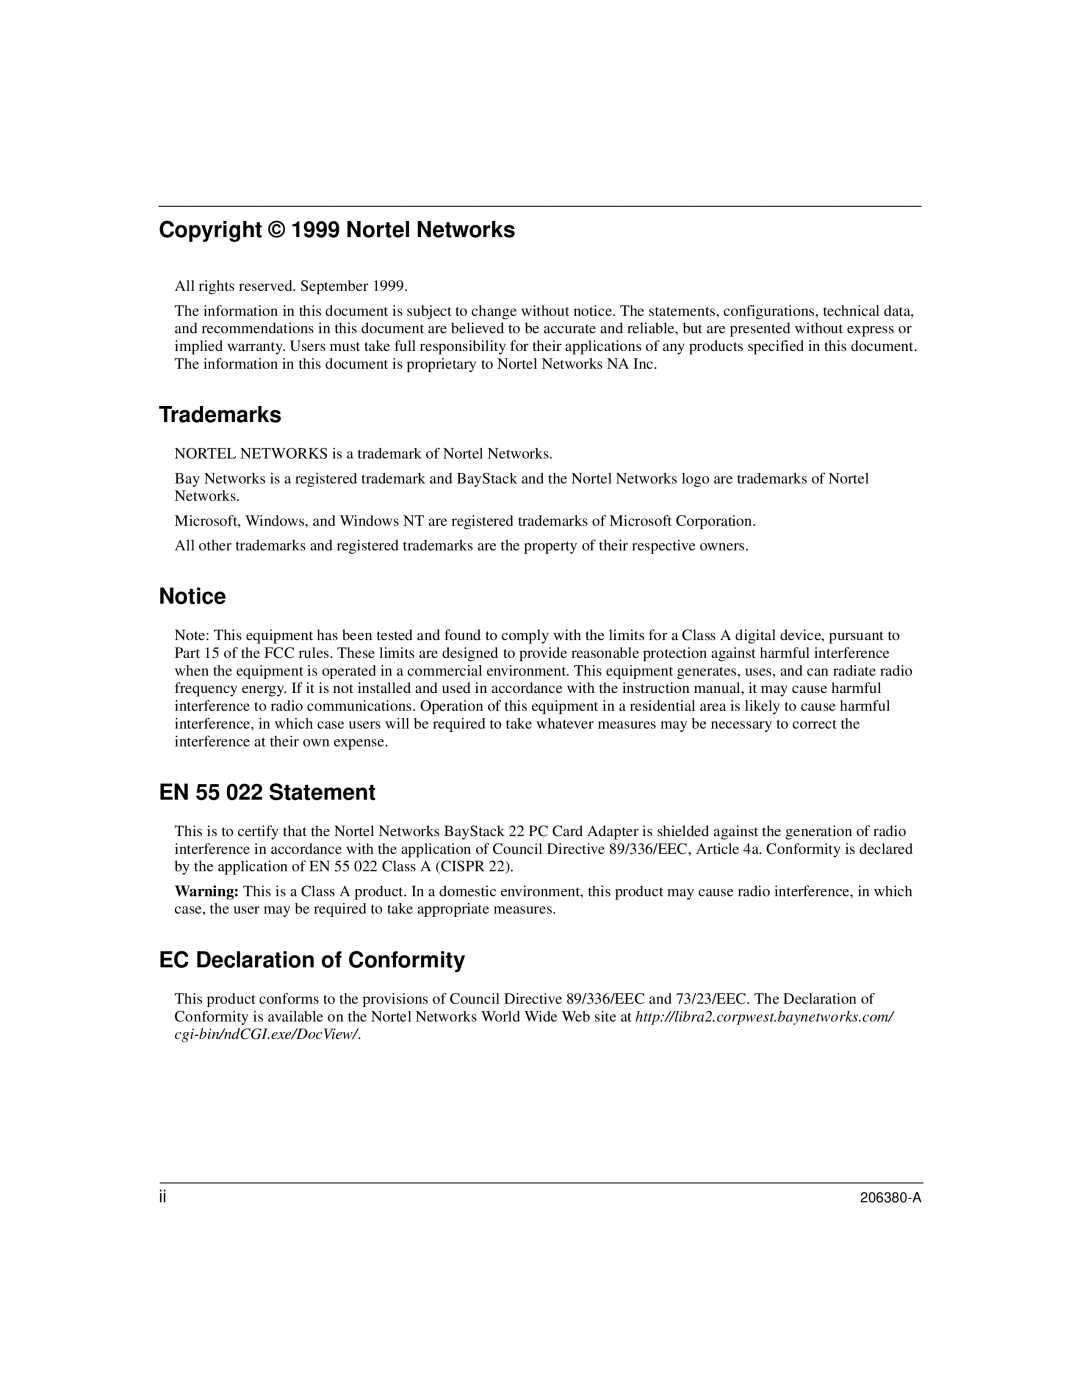 3Com 206380-A manual Copyright 1999 Nortel Networks, Trademarks, EN 55 022 Statement, EC Declaration of Conformity 